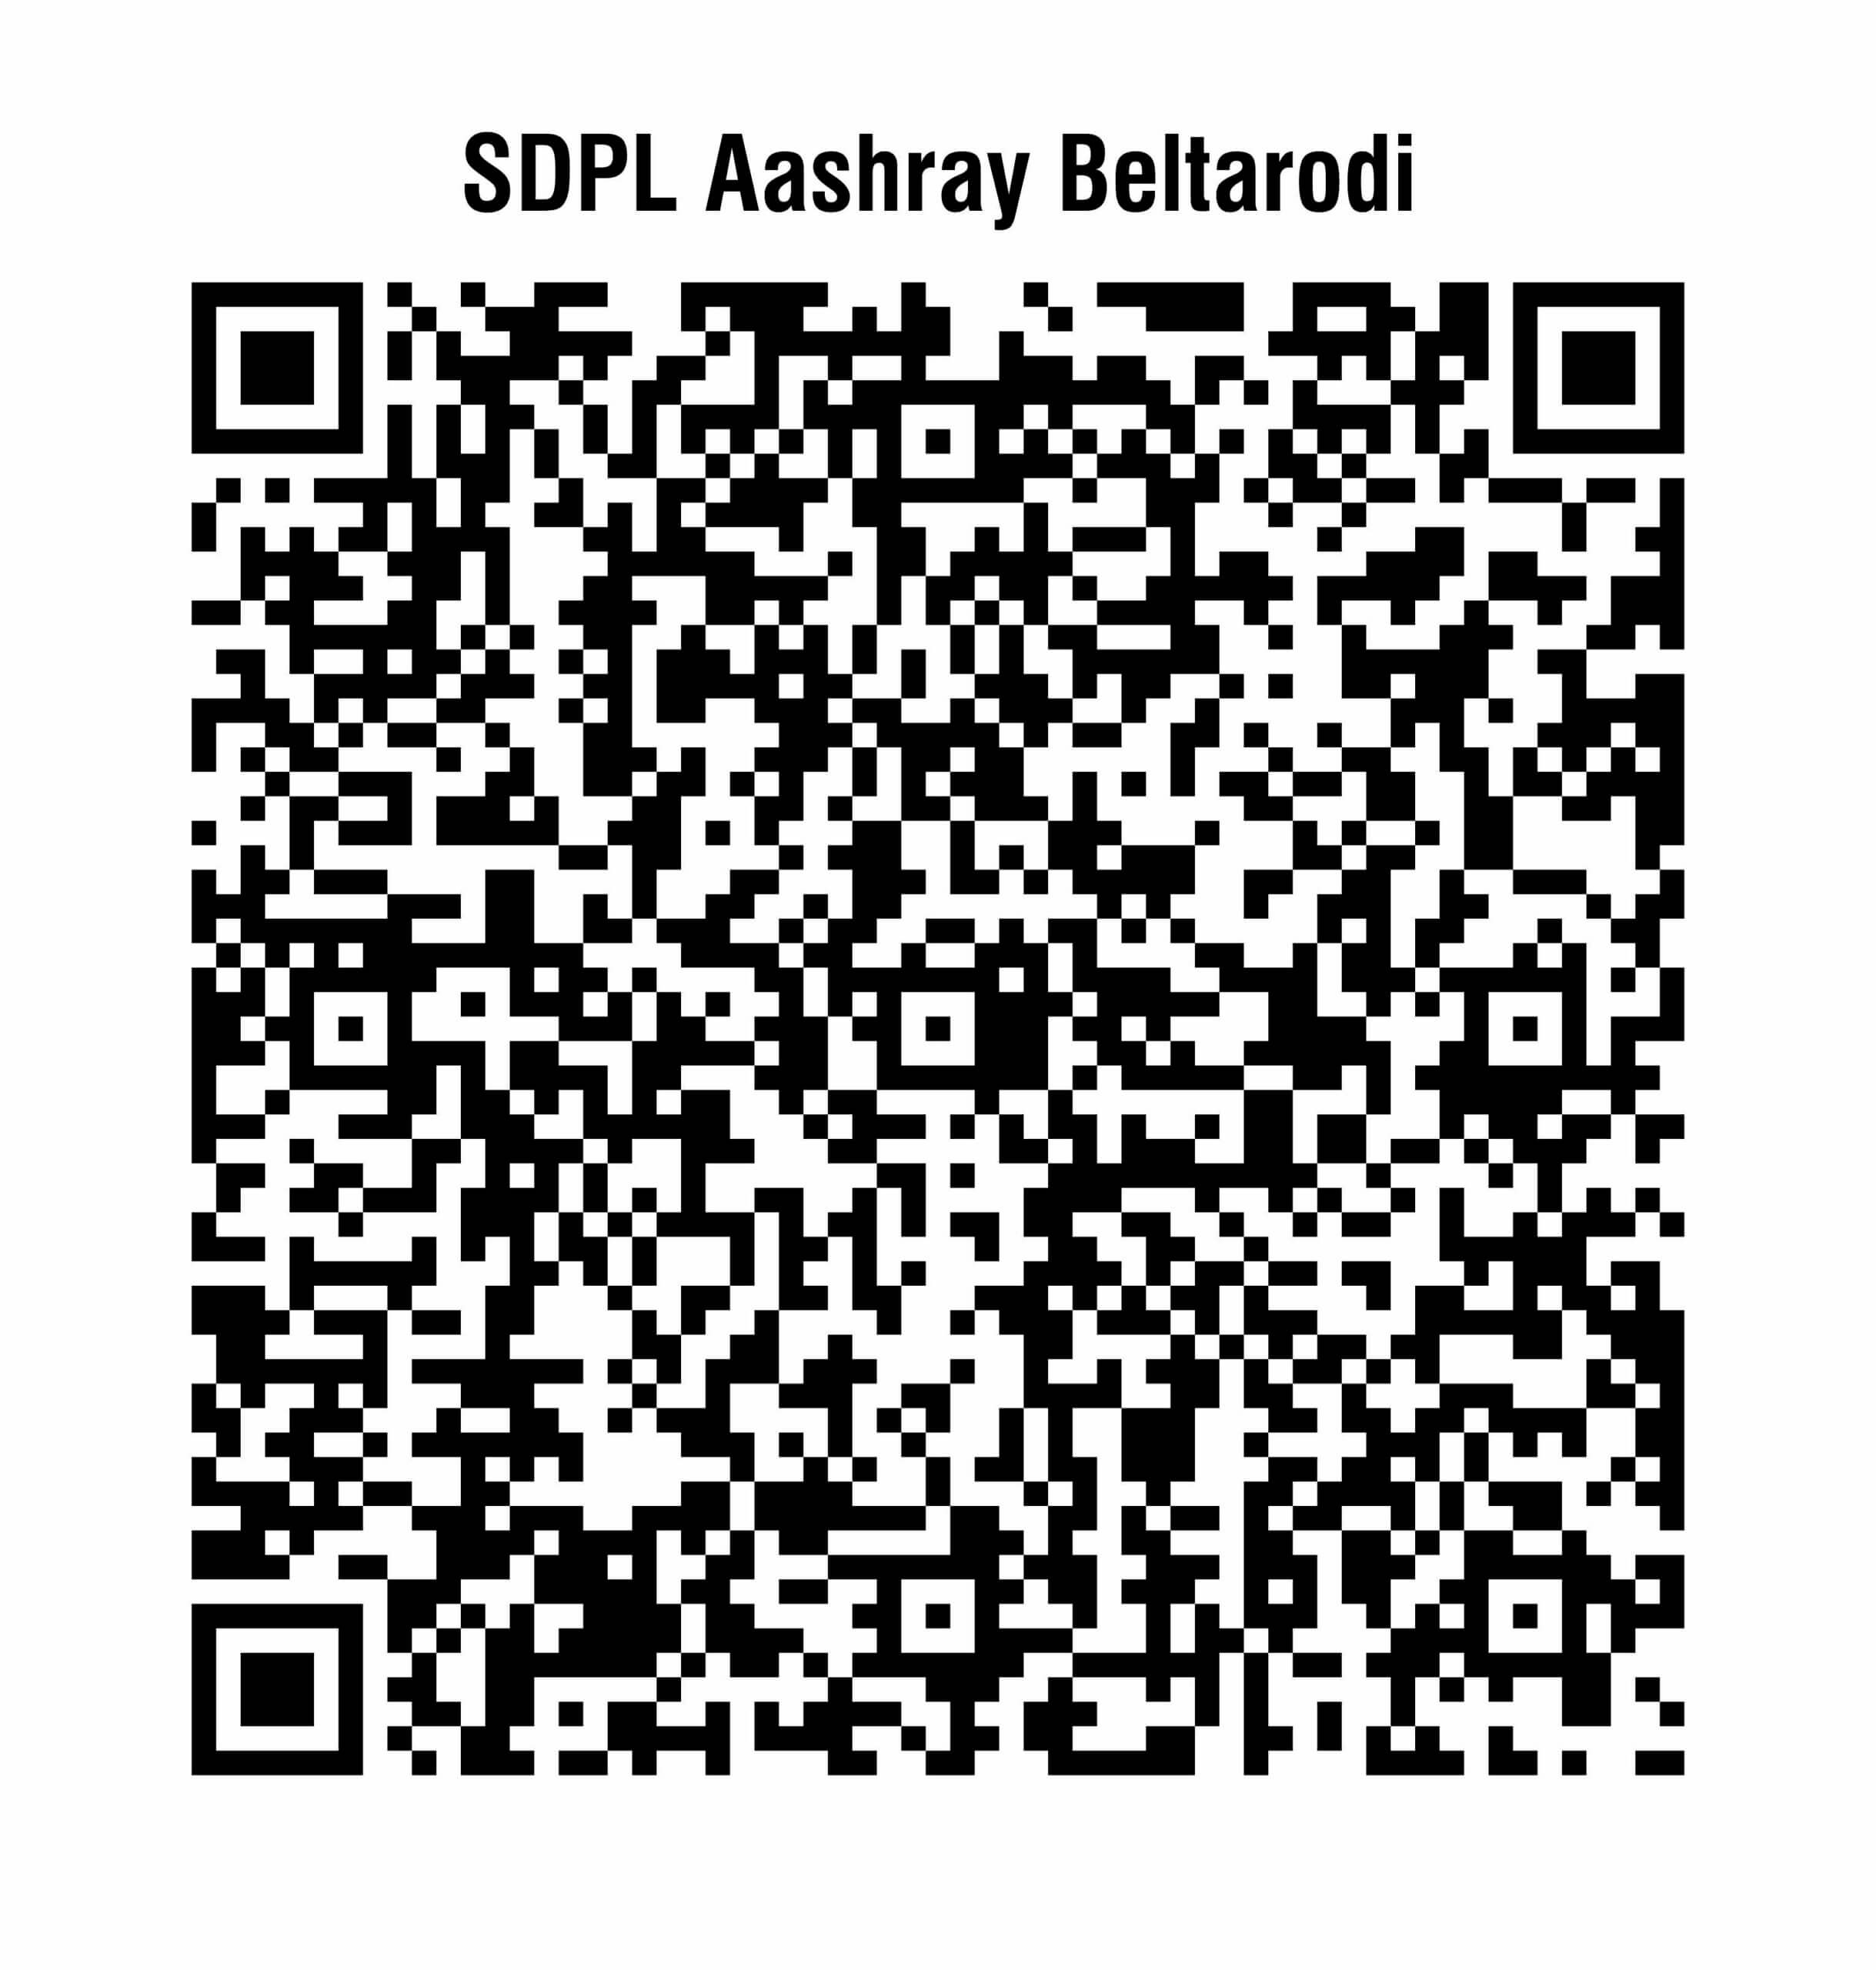 SDPL Aashray Beltarodi P50500023552 1 scaled 1